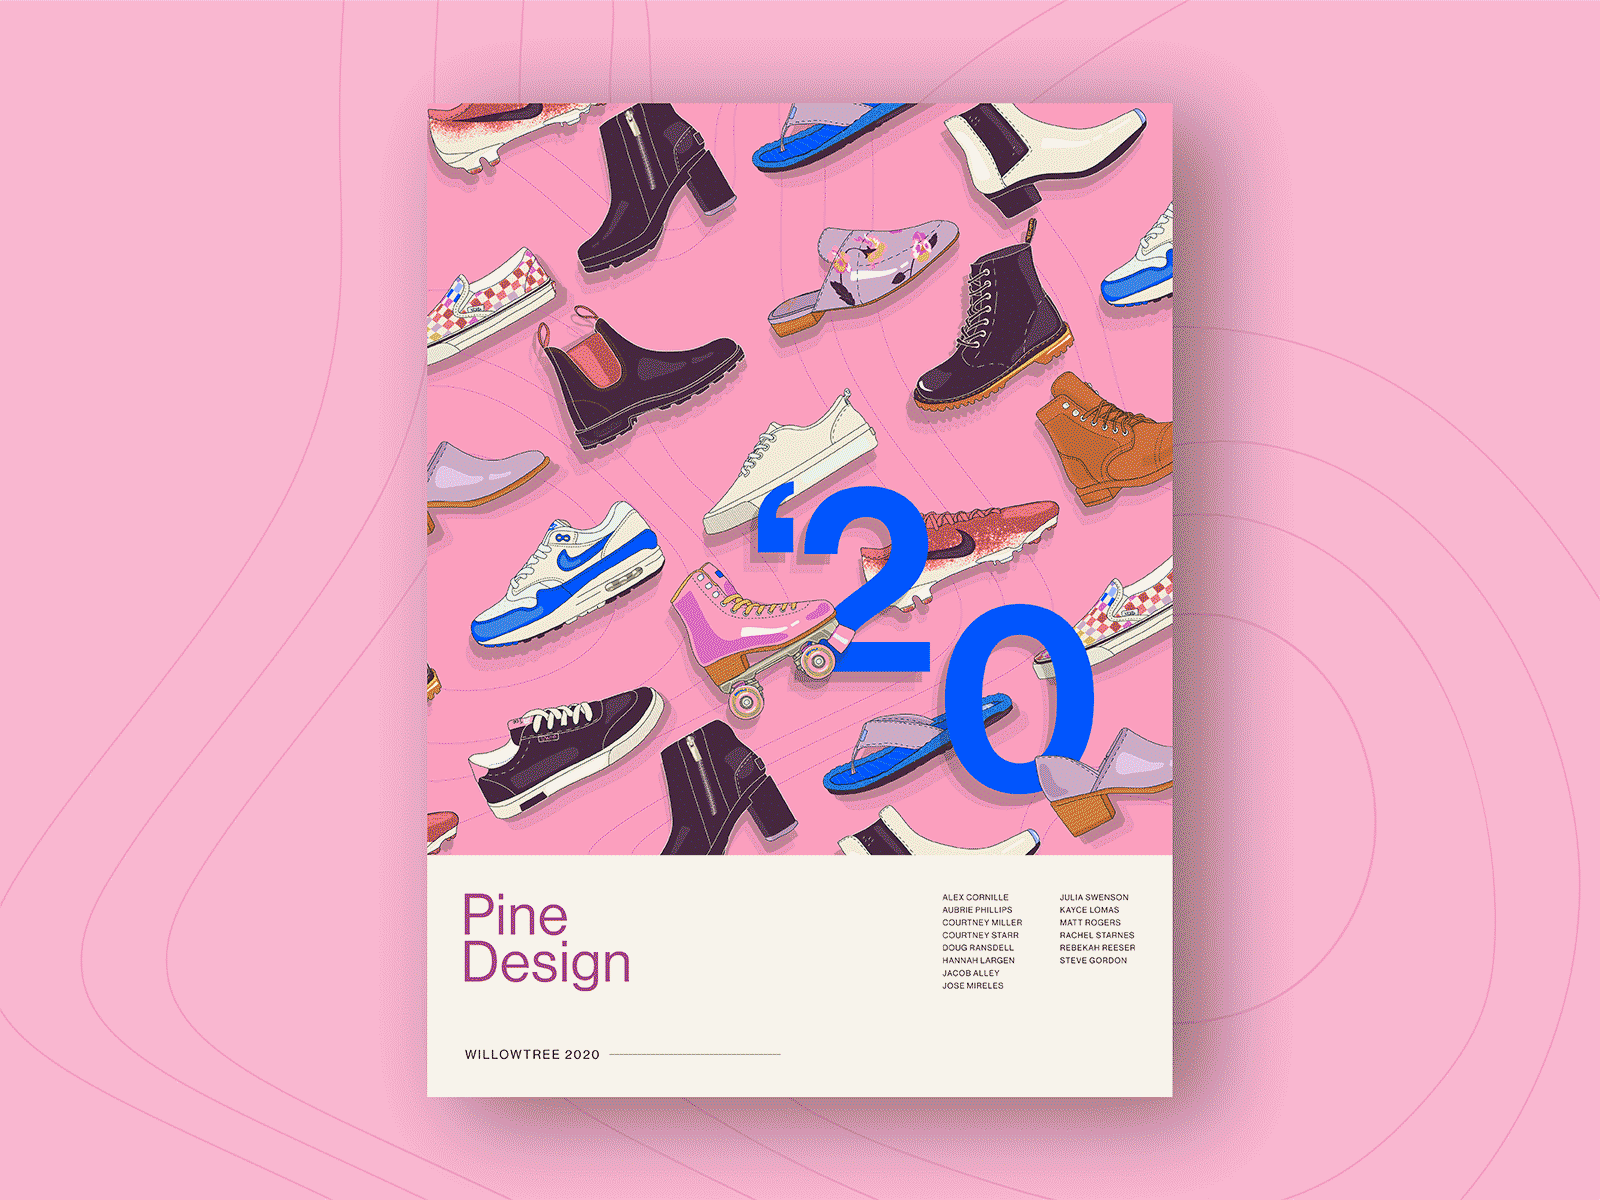 WillowTree Pine Design Team 2020 design flat icon illustration poster poster design vector